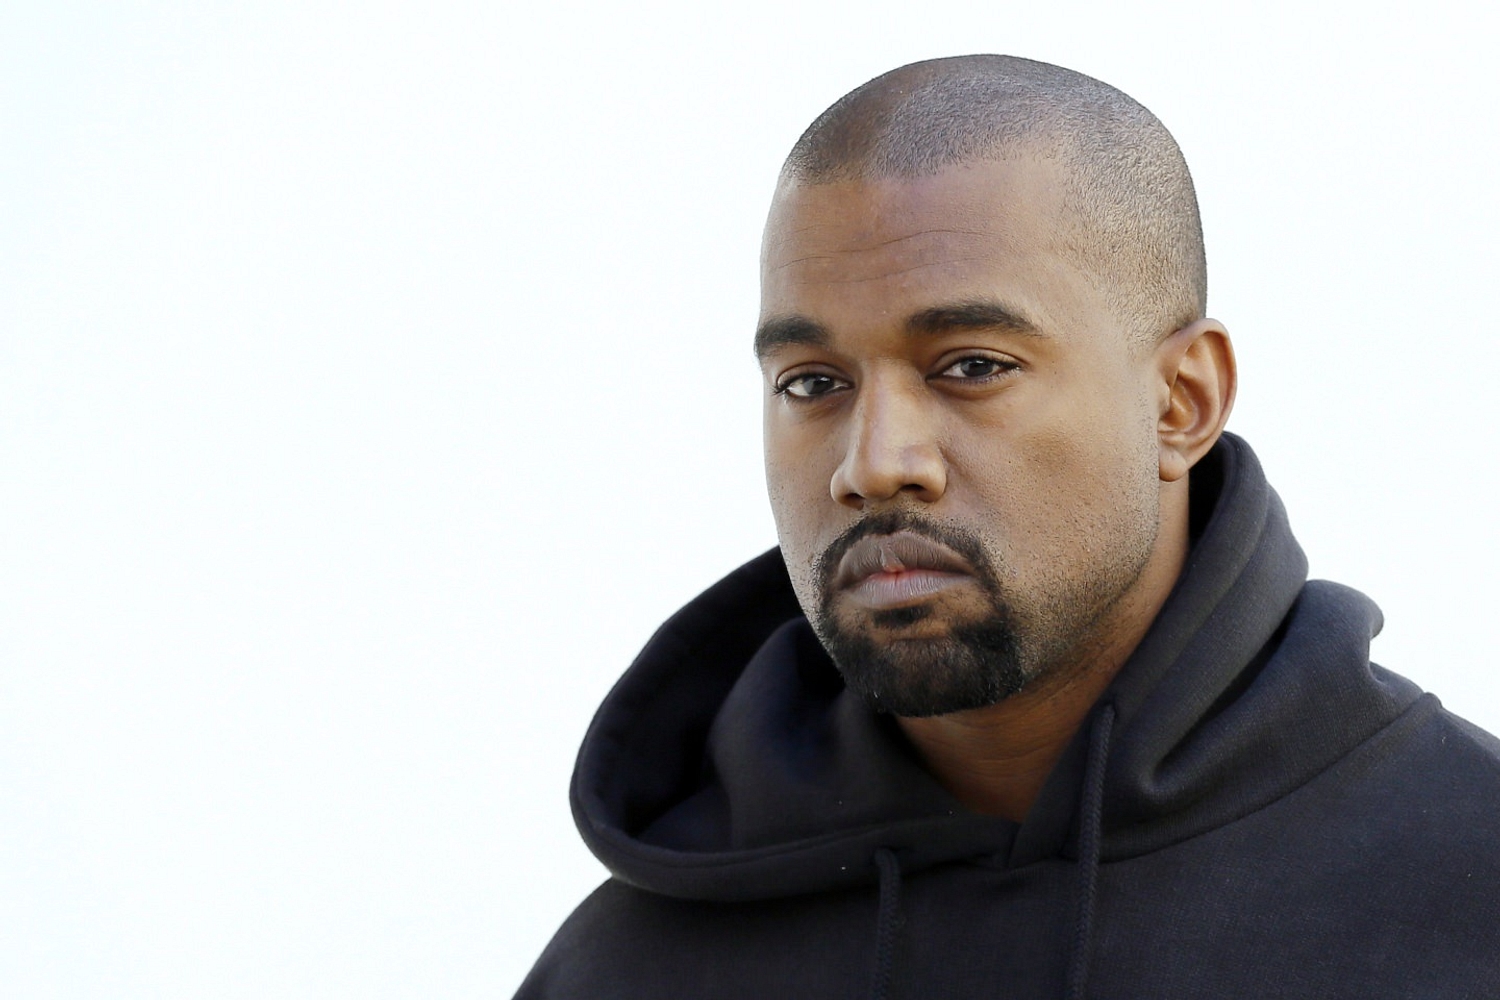 Kanye West 7/1 to deliver a 30 minute speech during Glastonbury headline slot